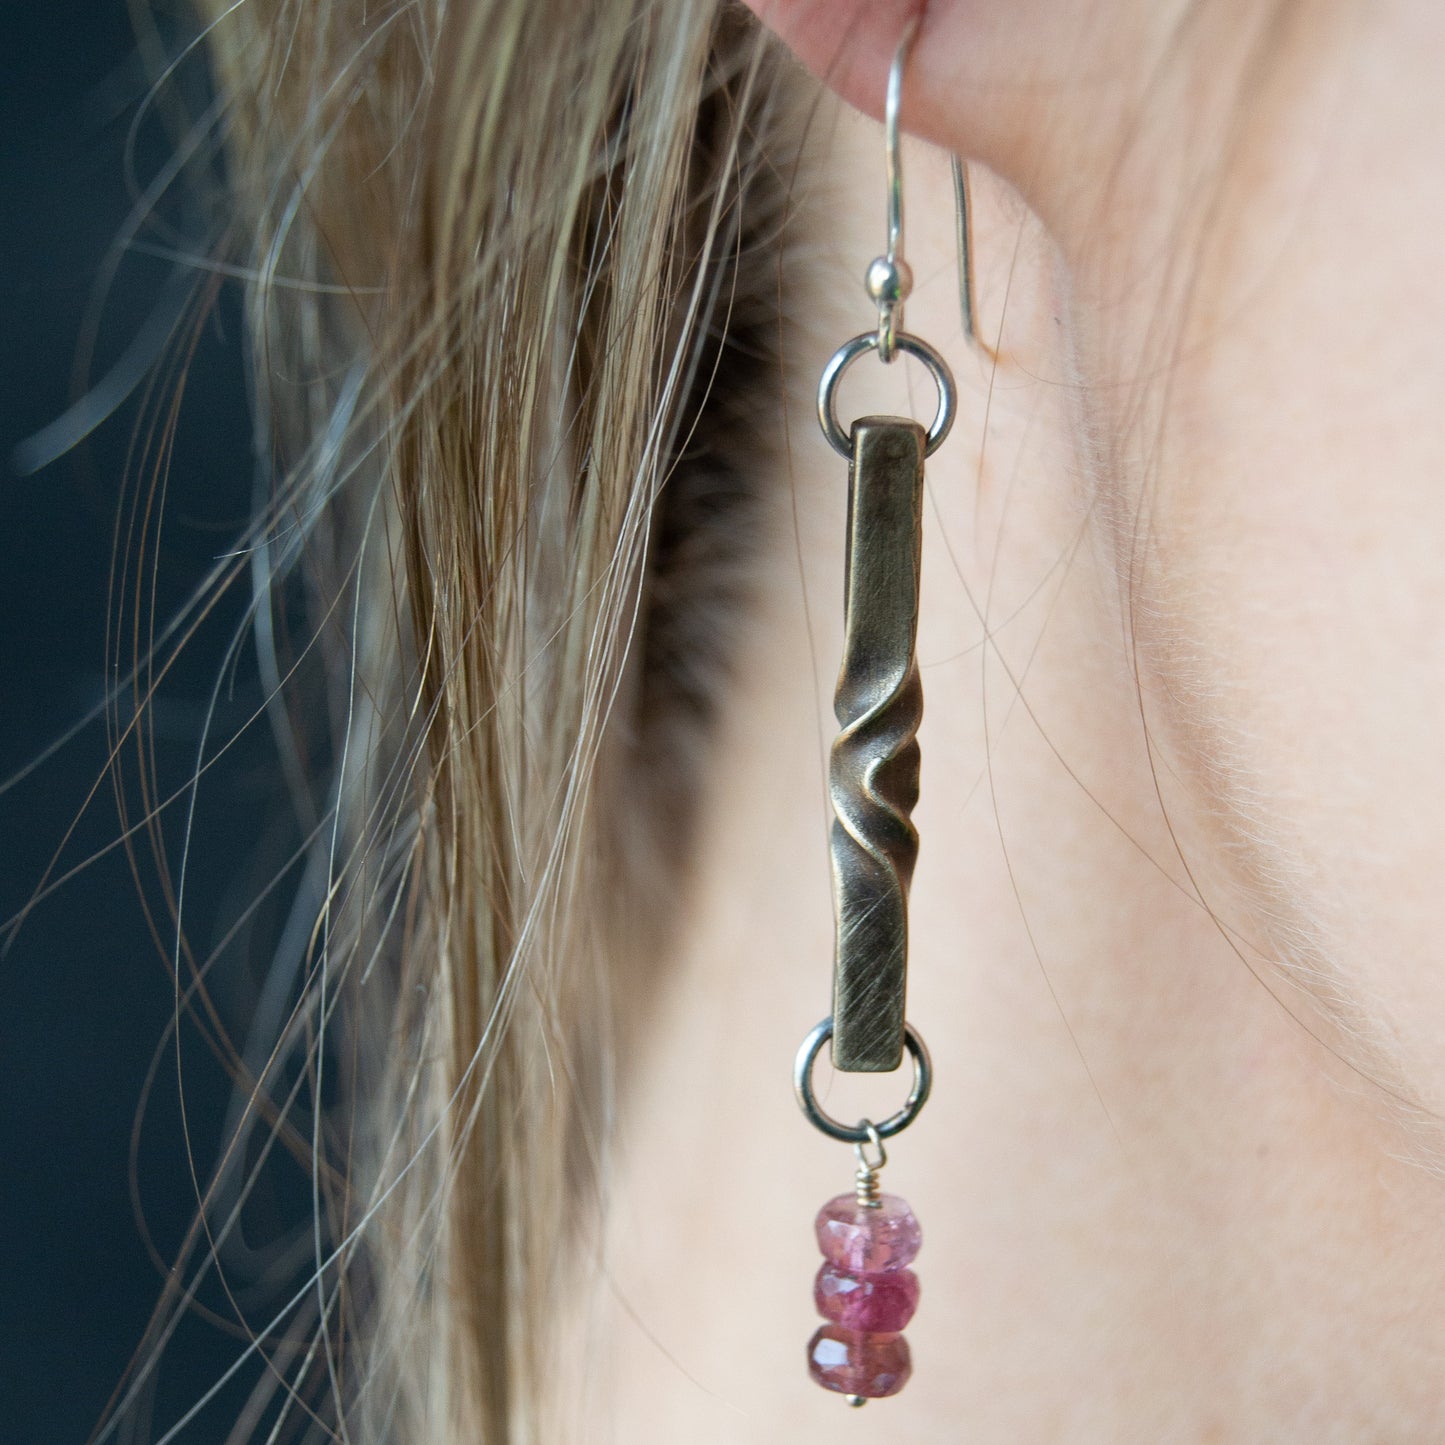 gem and bronze earrings - 8th anniversary gift for her- tanzanite, rose tourmaline, green tourmaline earrings